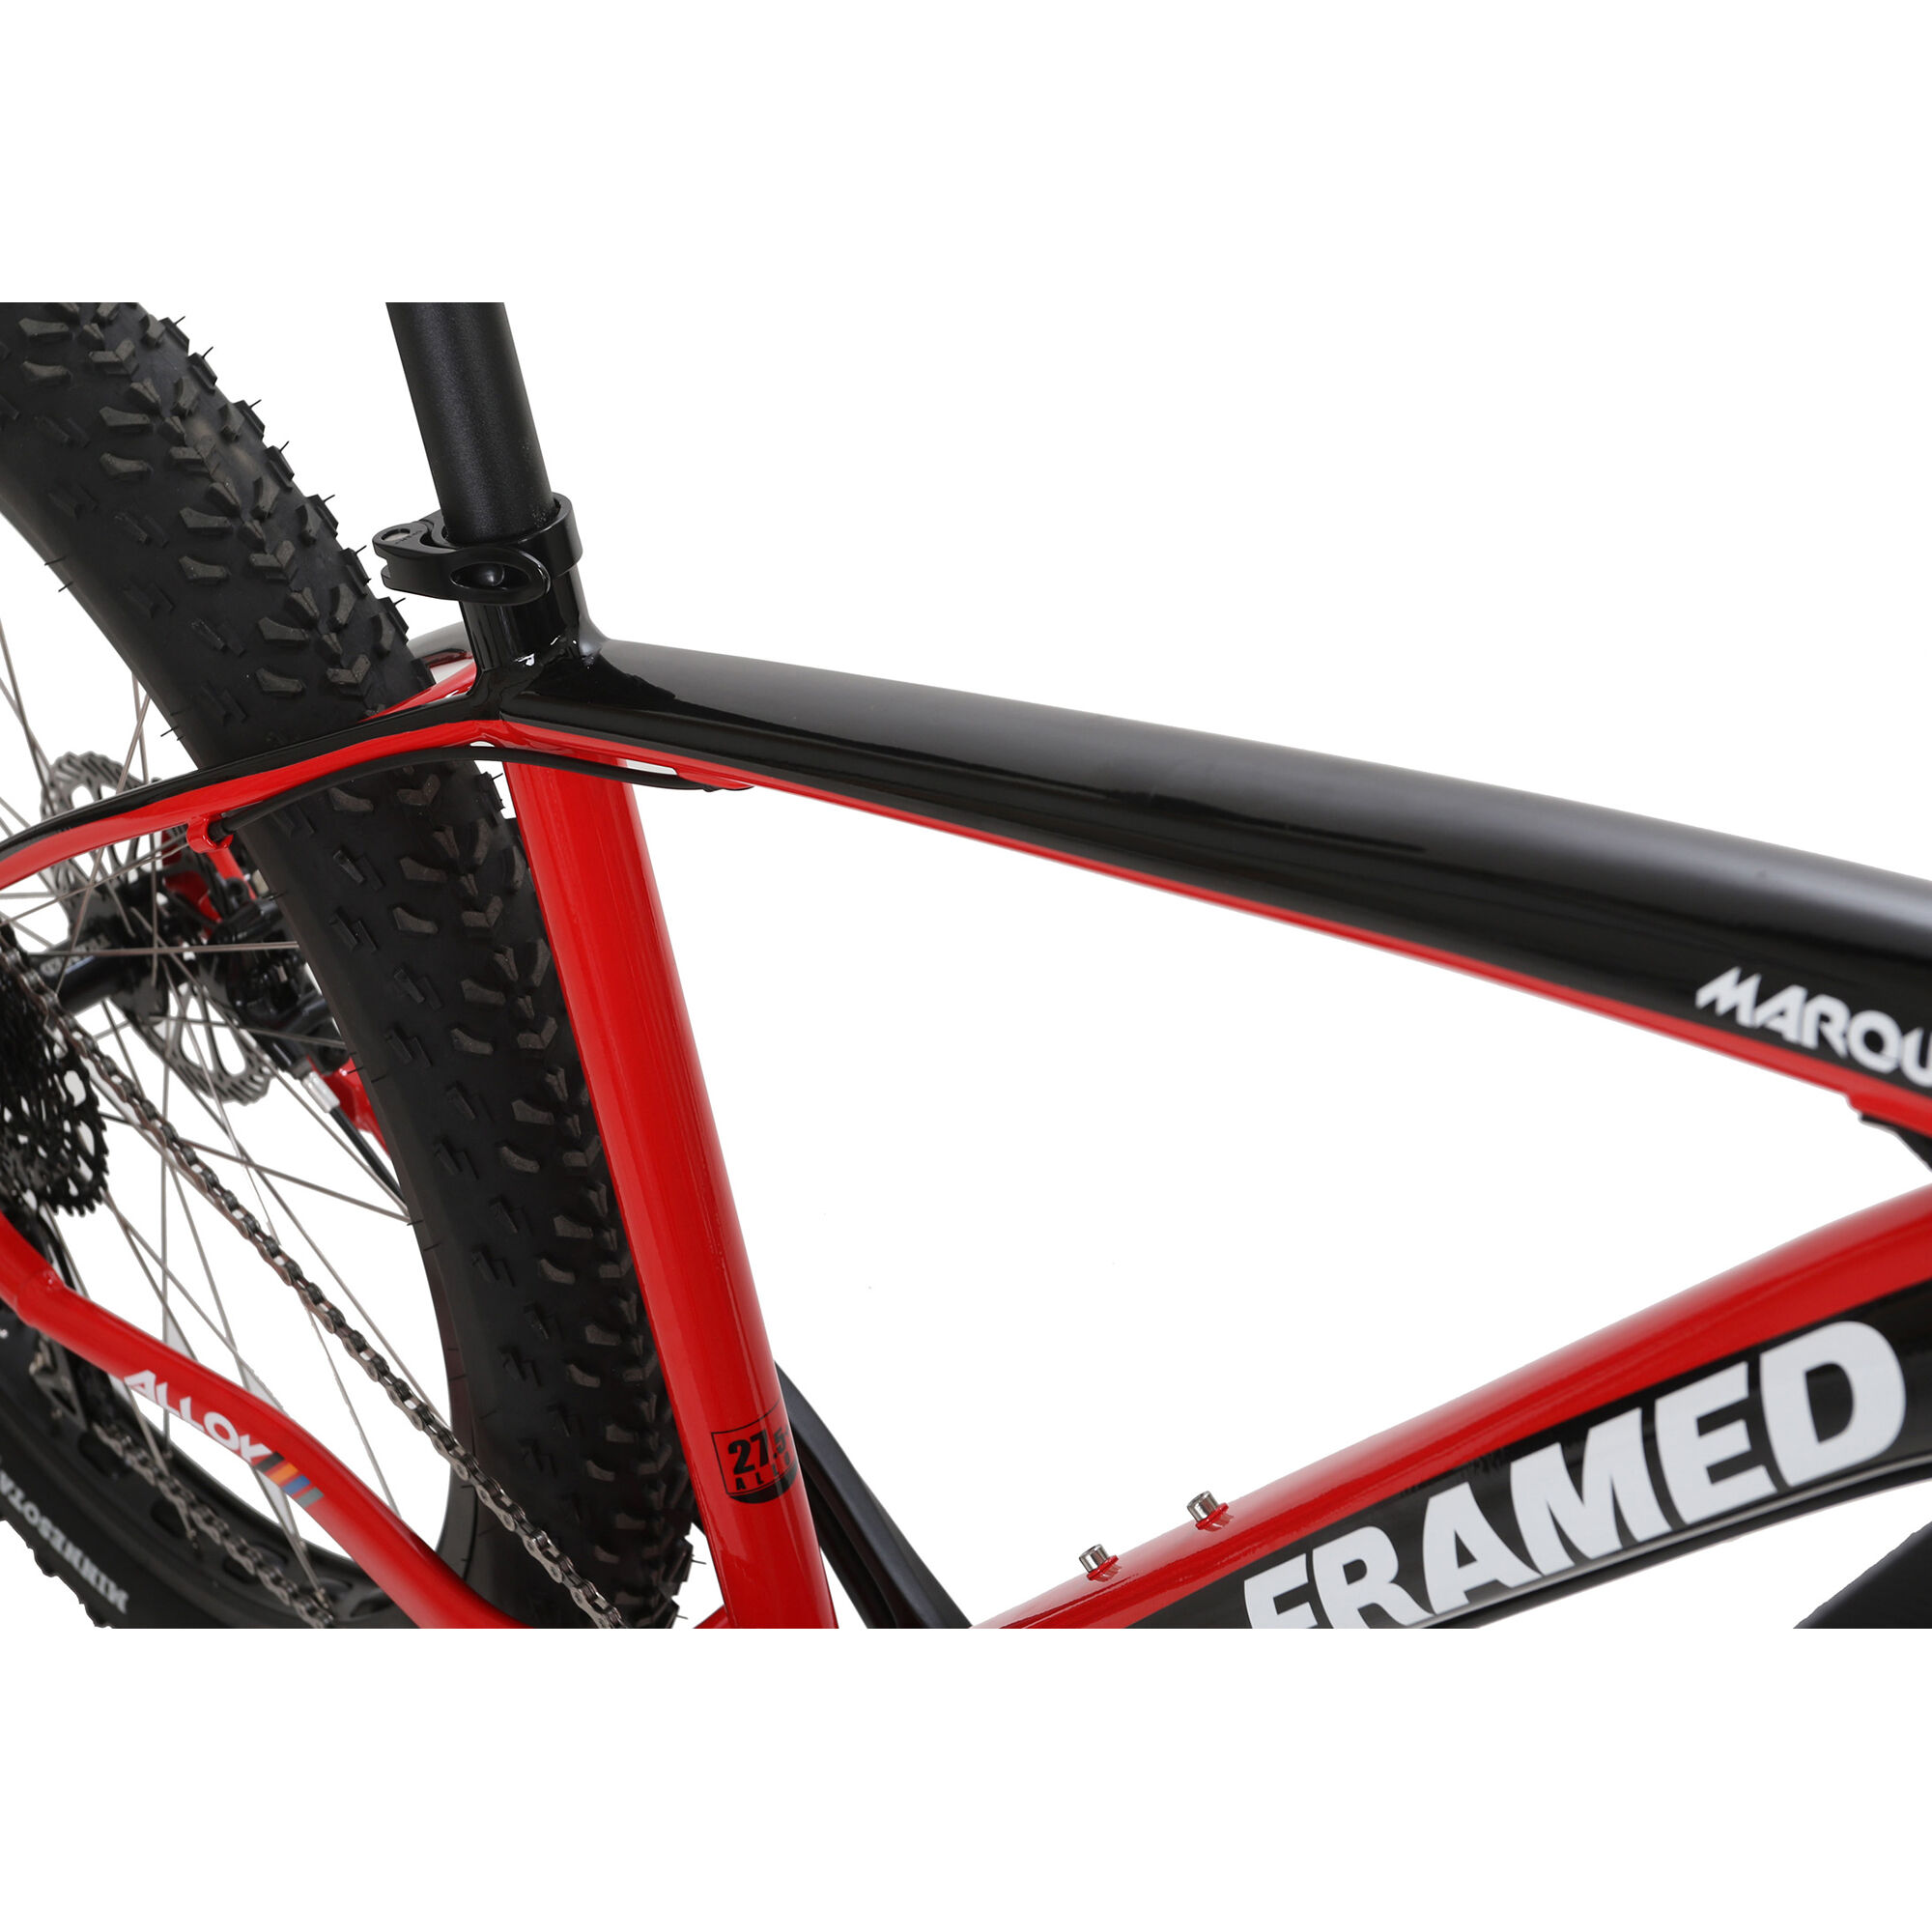 framed marquette alloy mountain bike